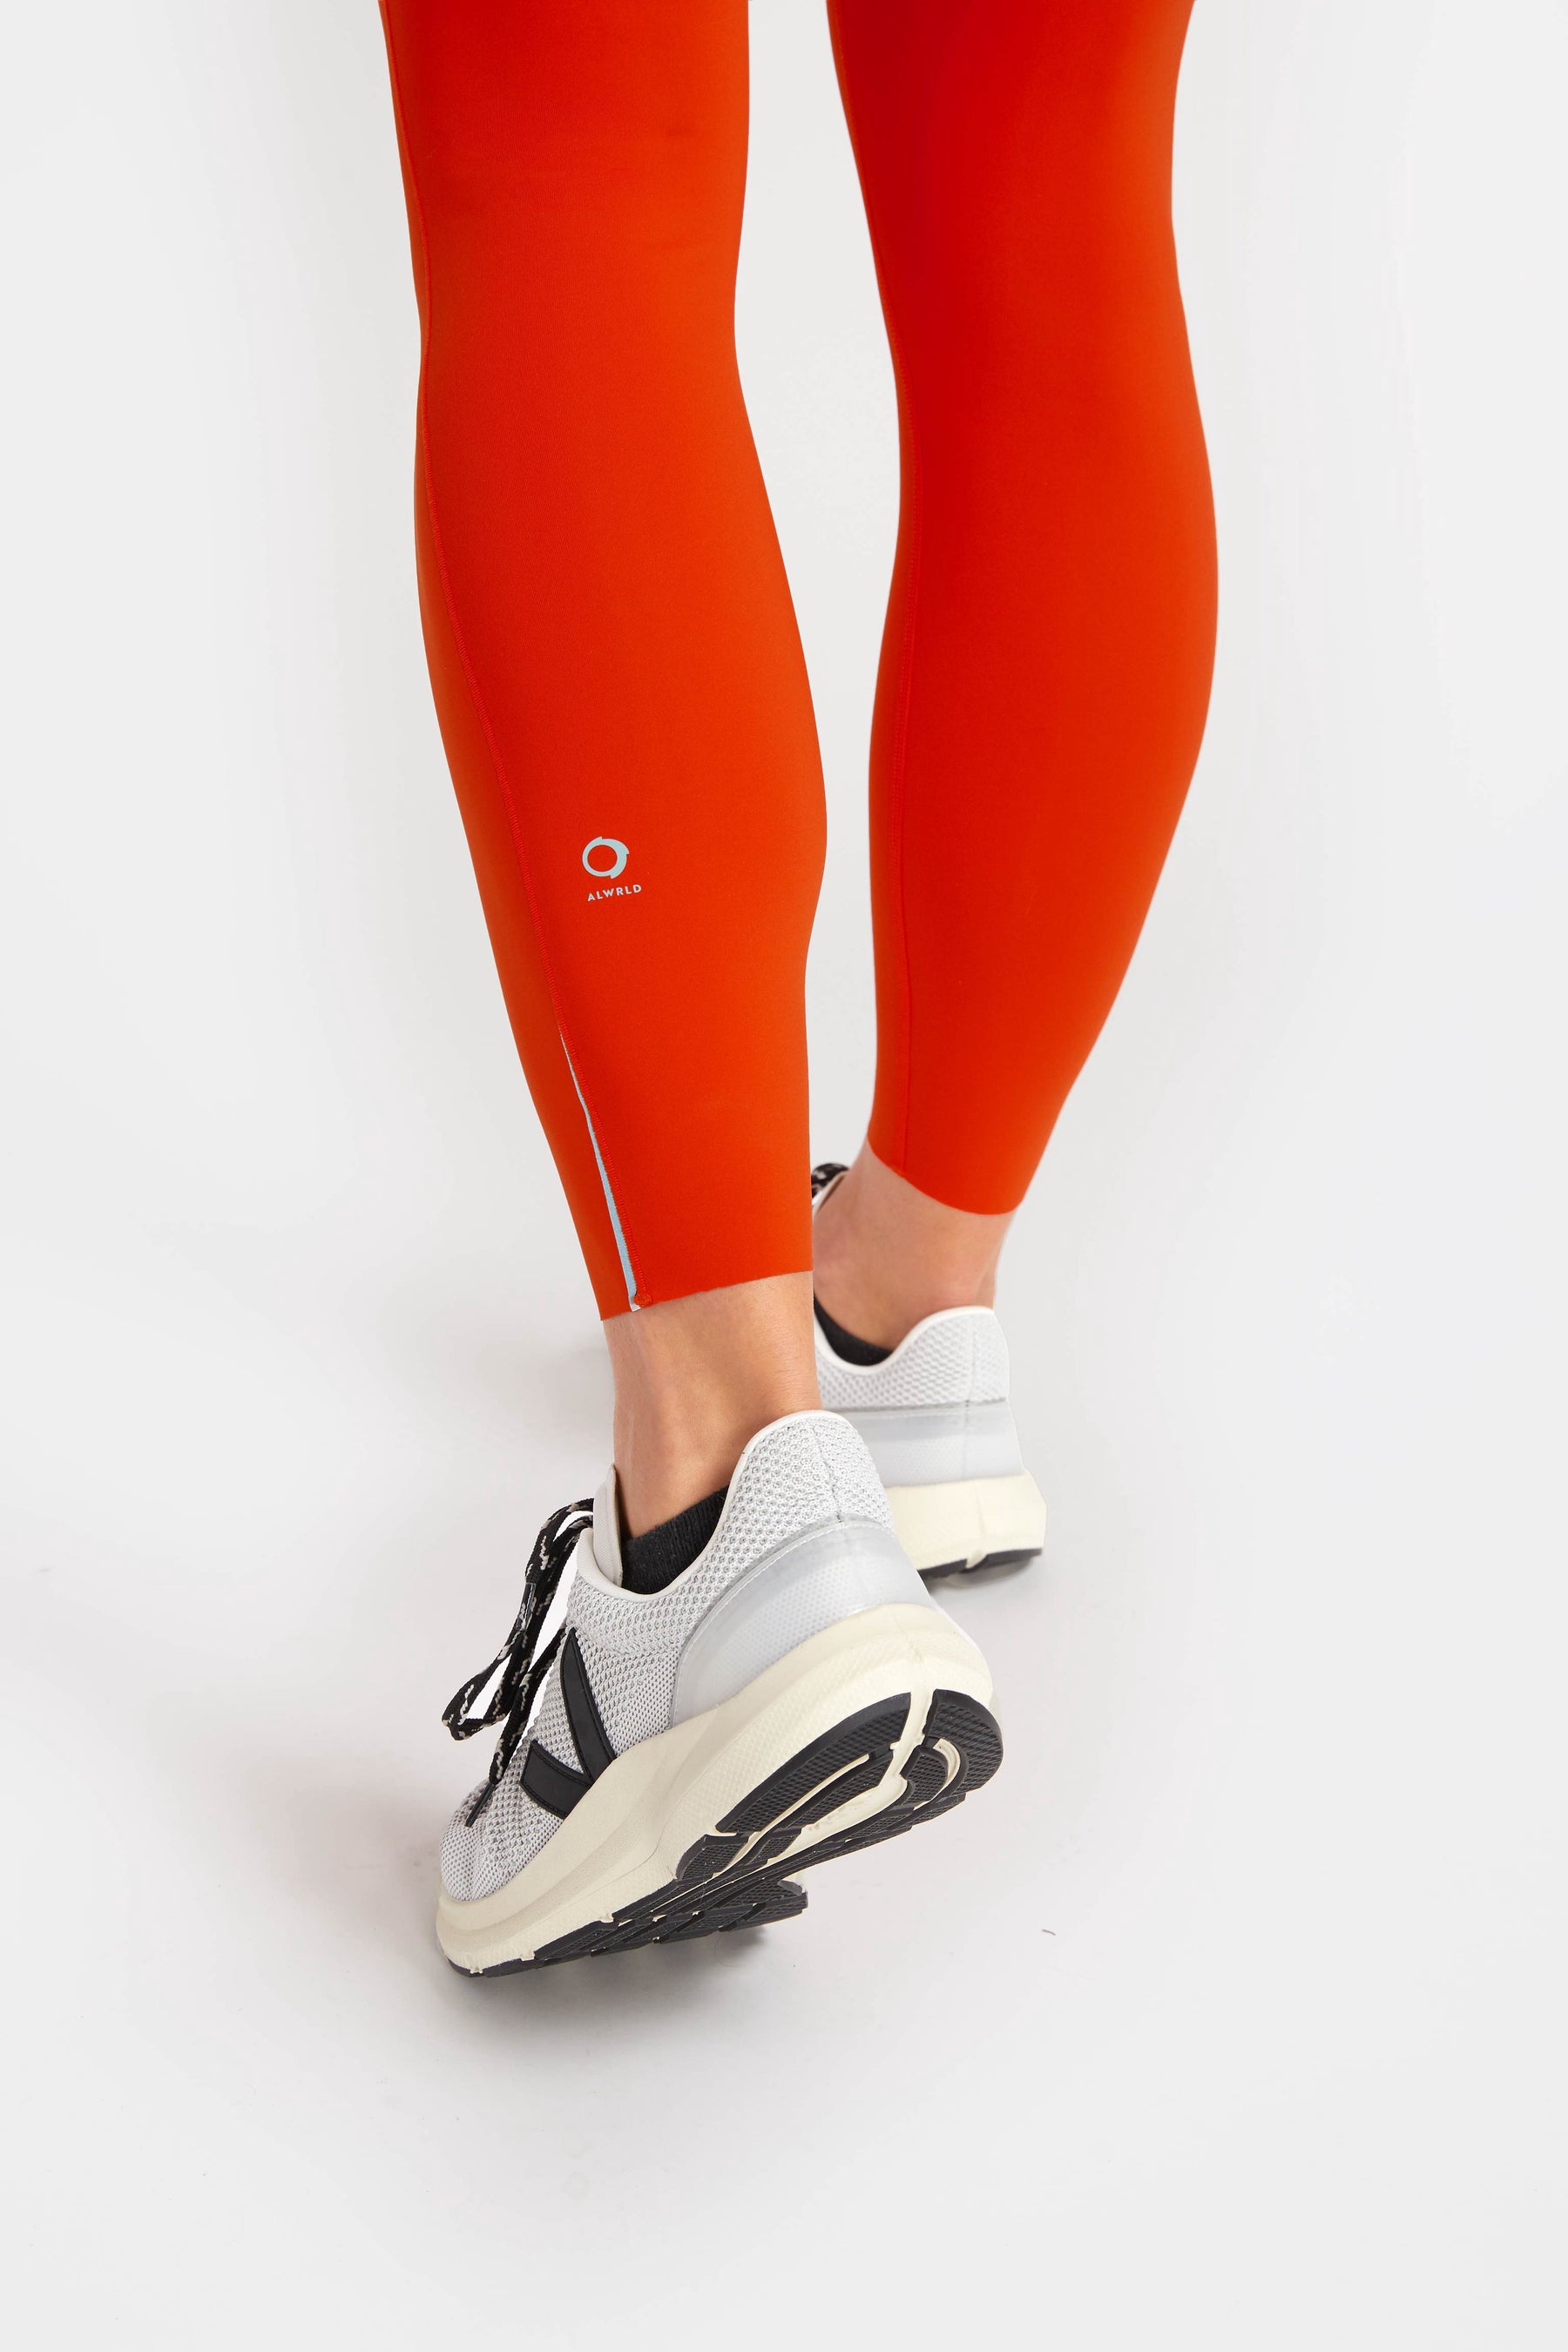 7/8 length athleticwear eco friendly leggings in red